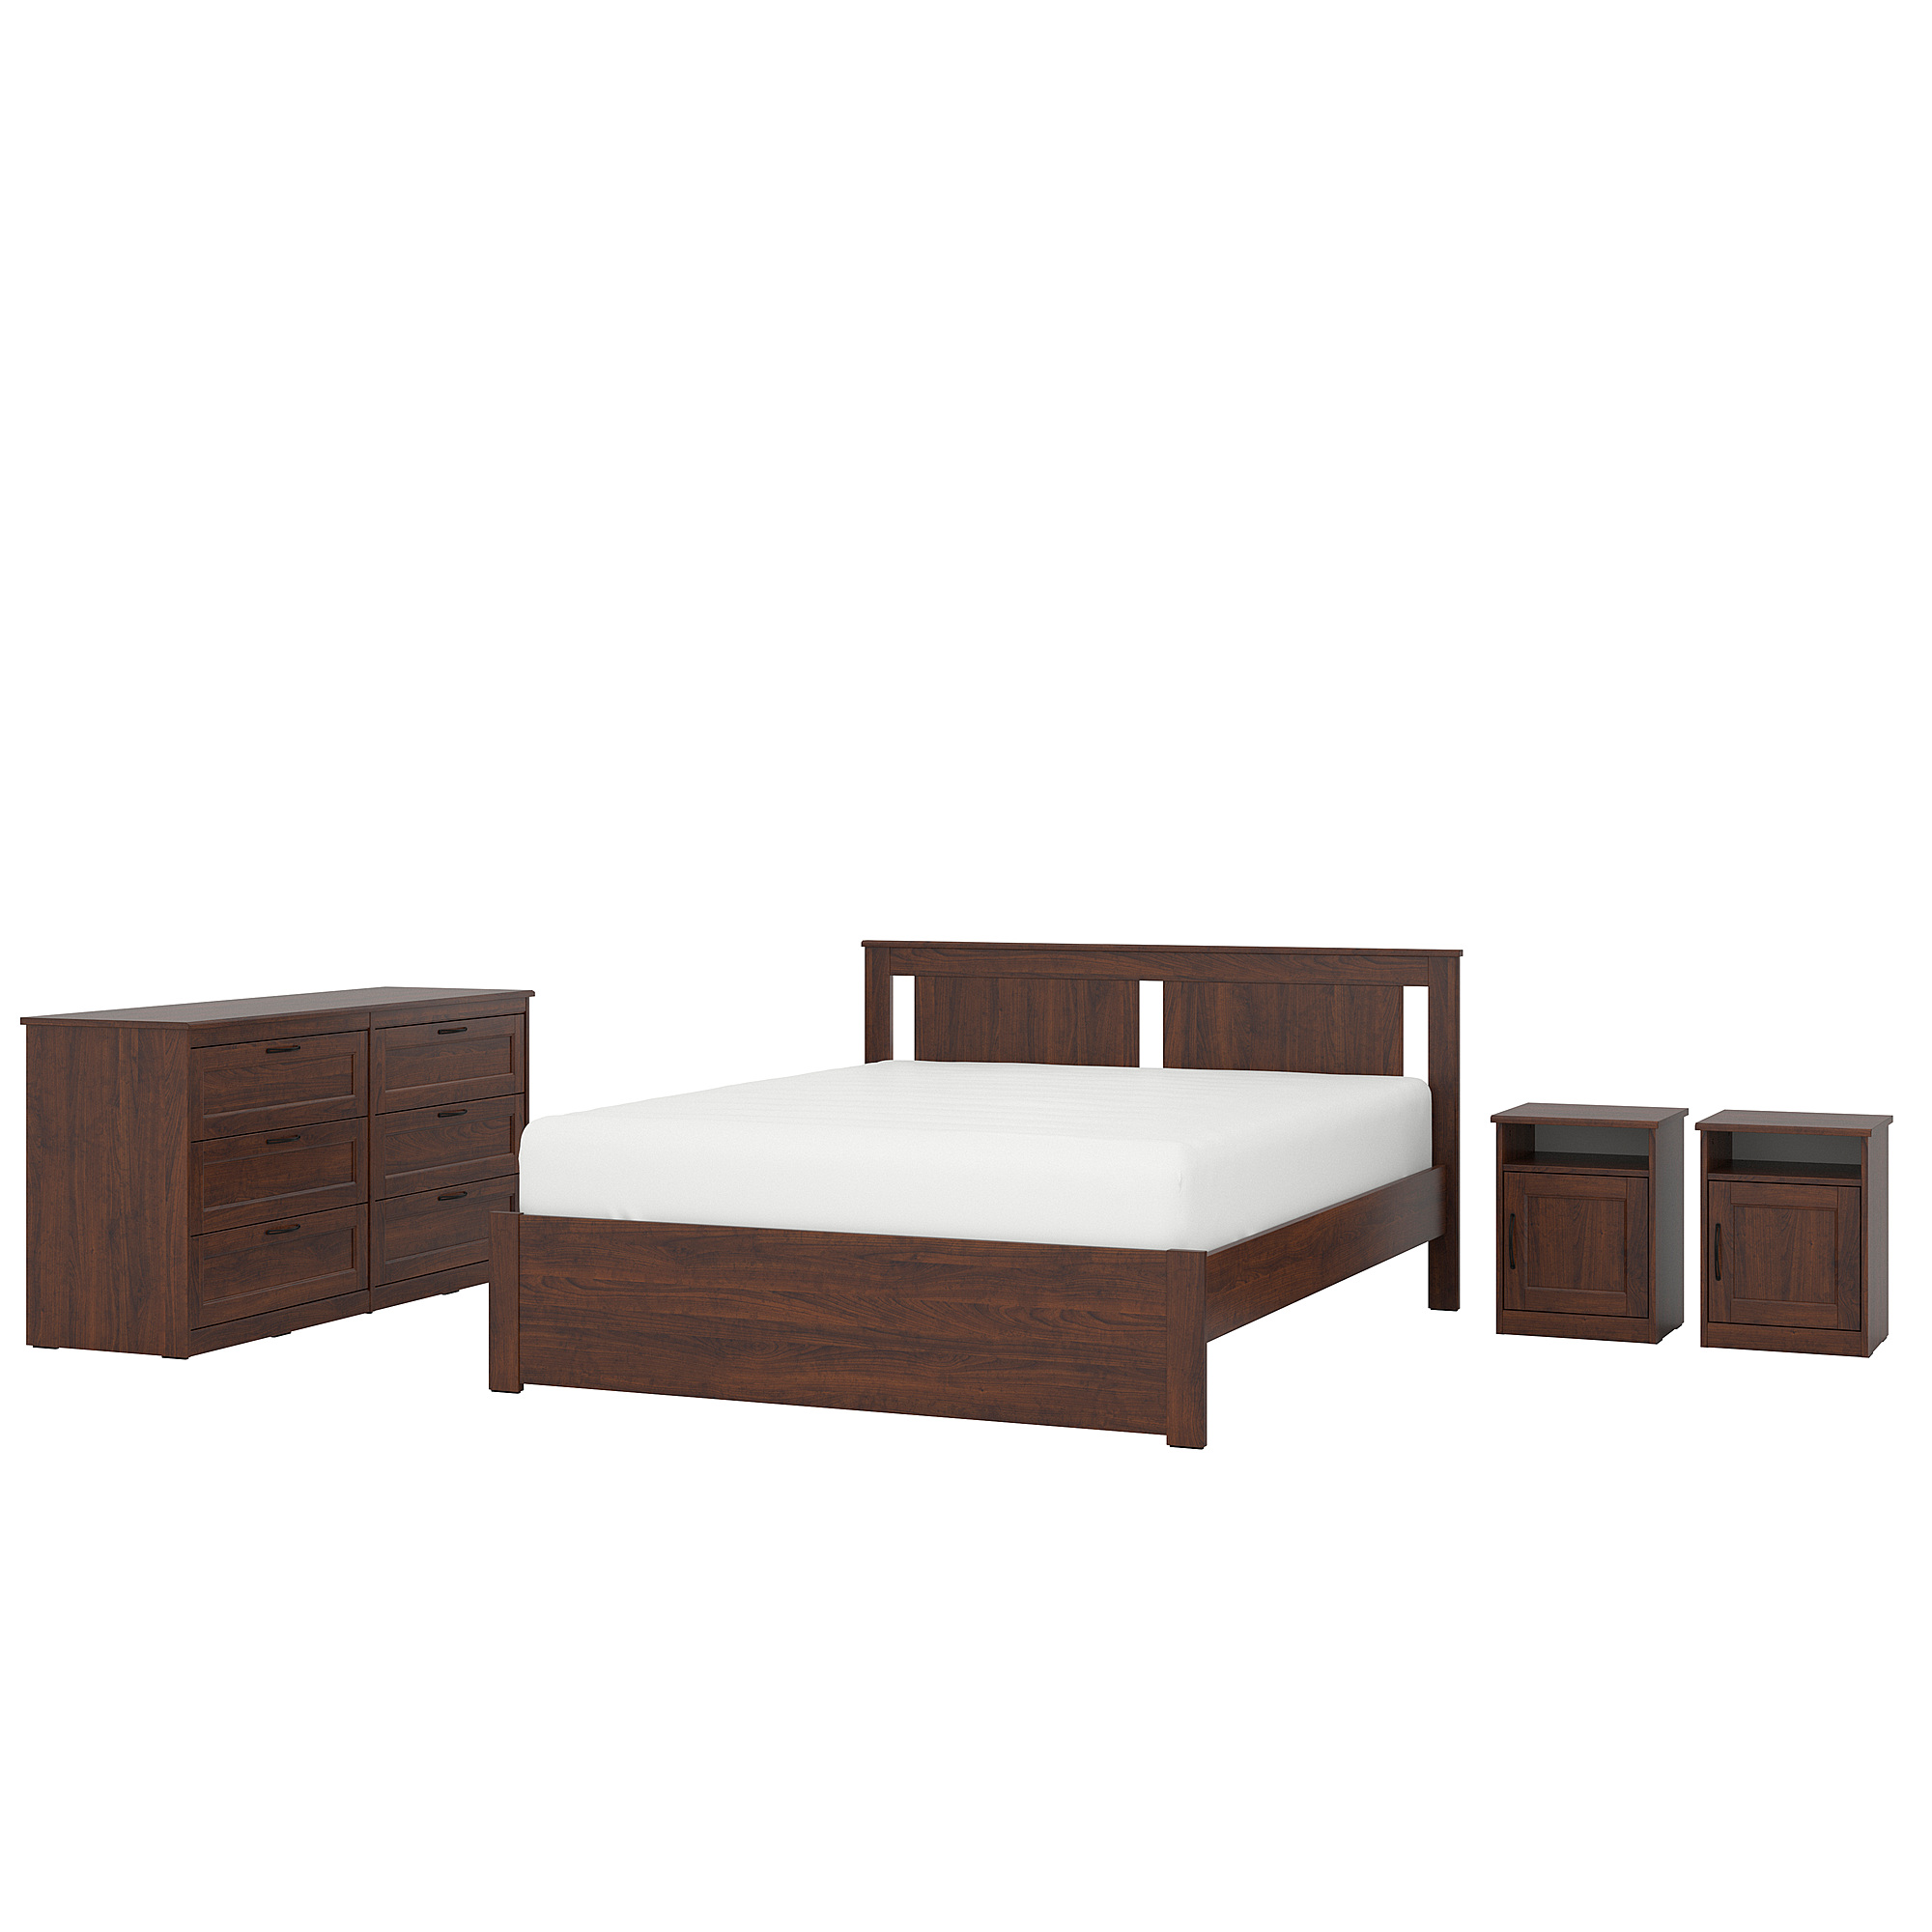 SONGESAND bedroom furniture, set of 4